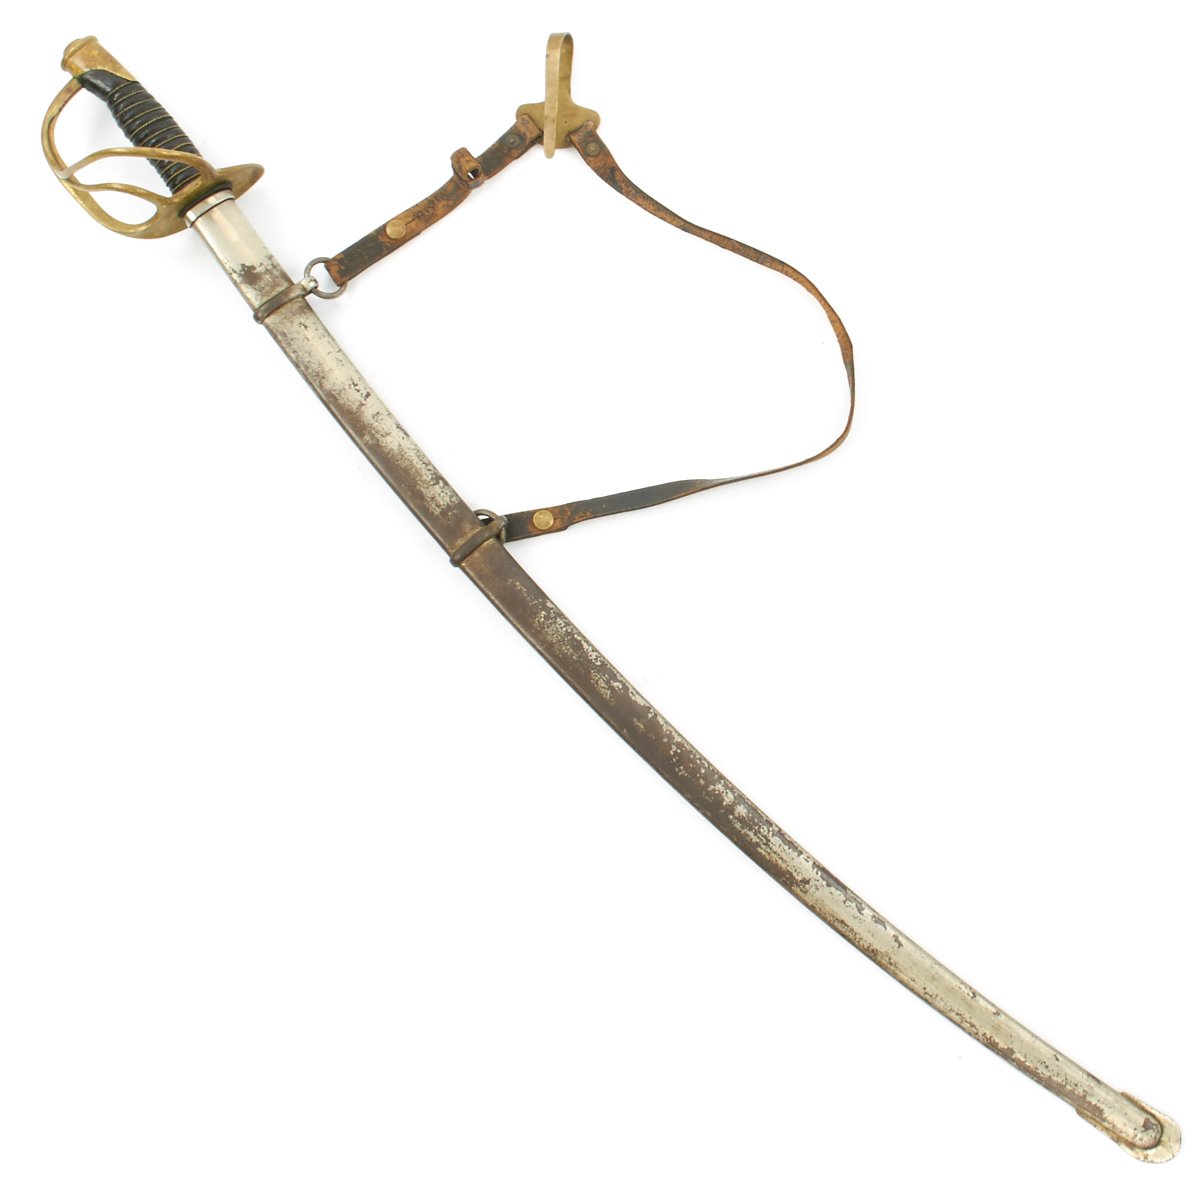 Original U.S. Civil War Model 1860 Light Cavalry Sword by Ames